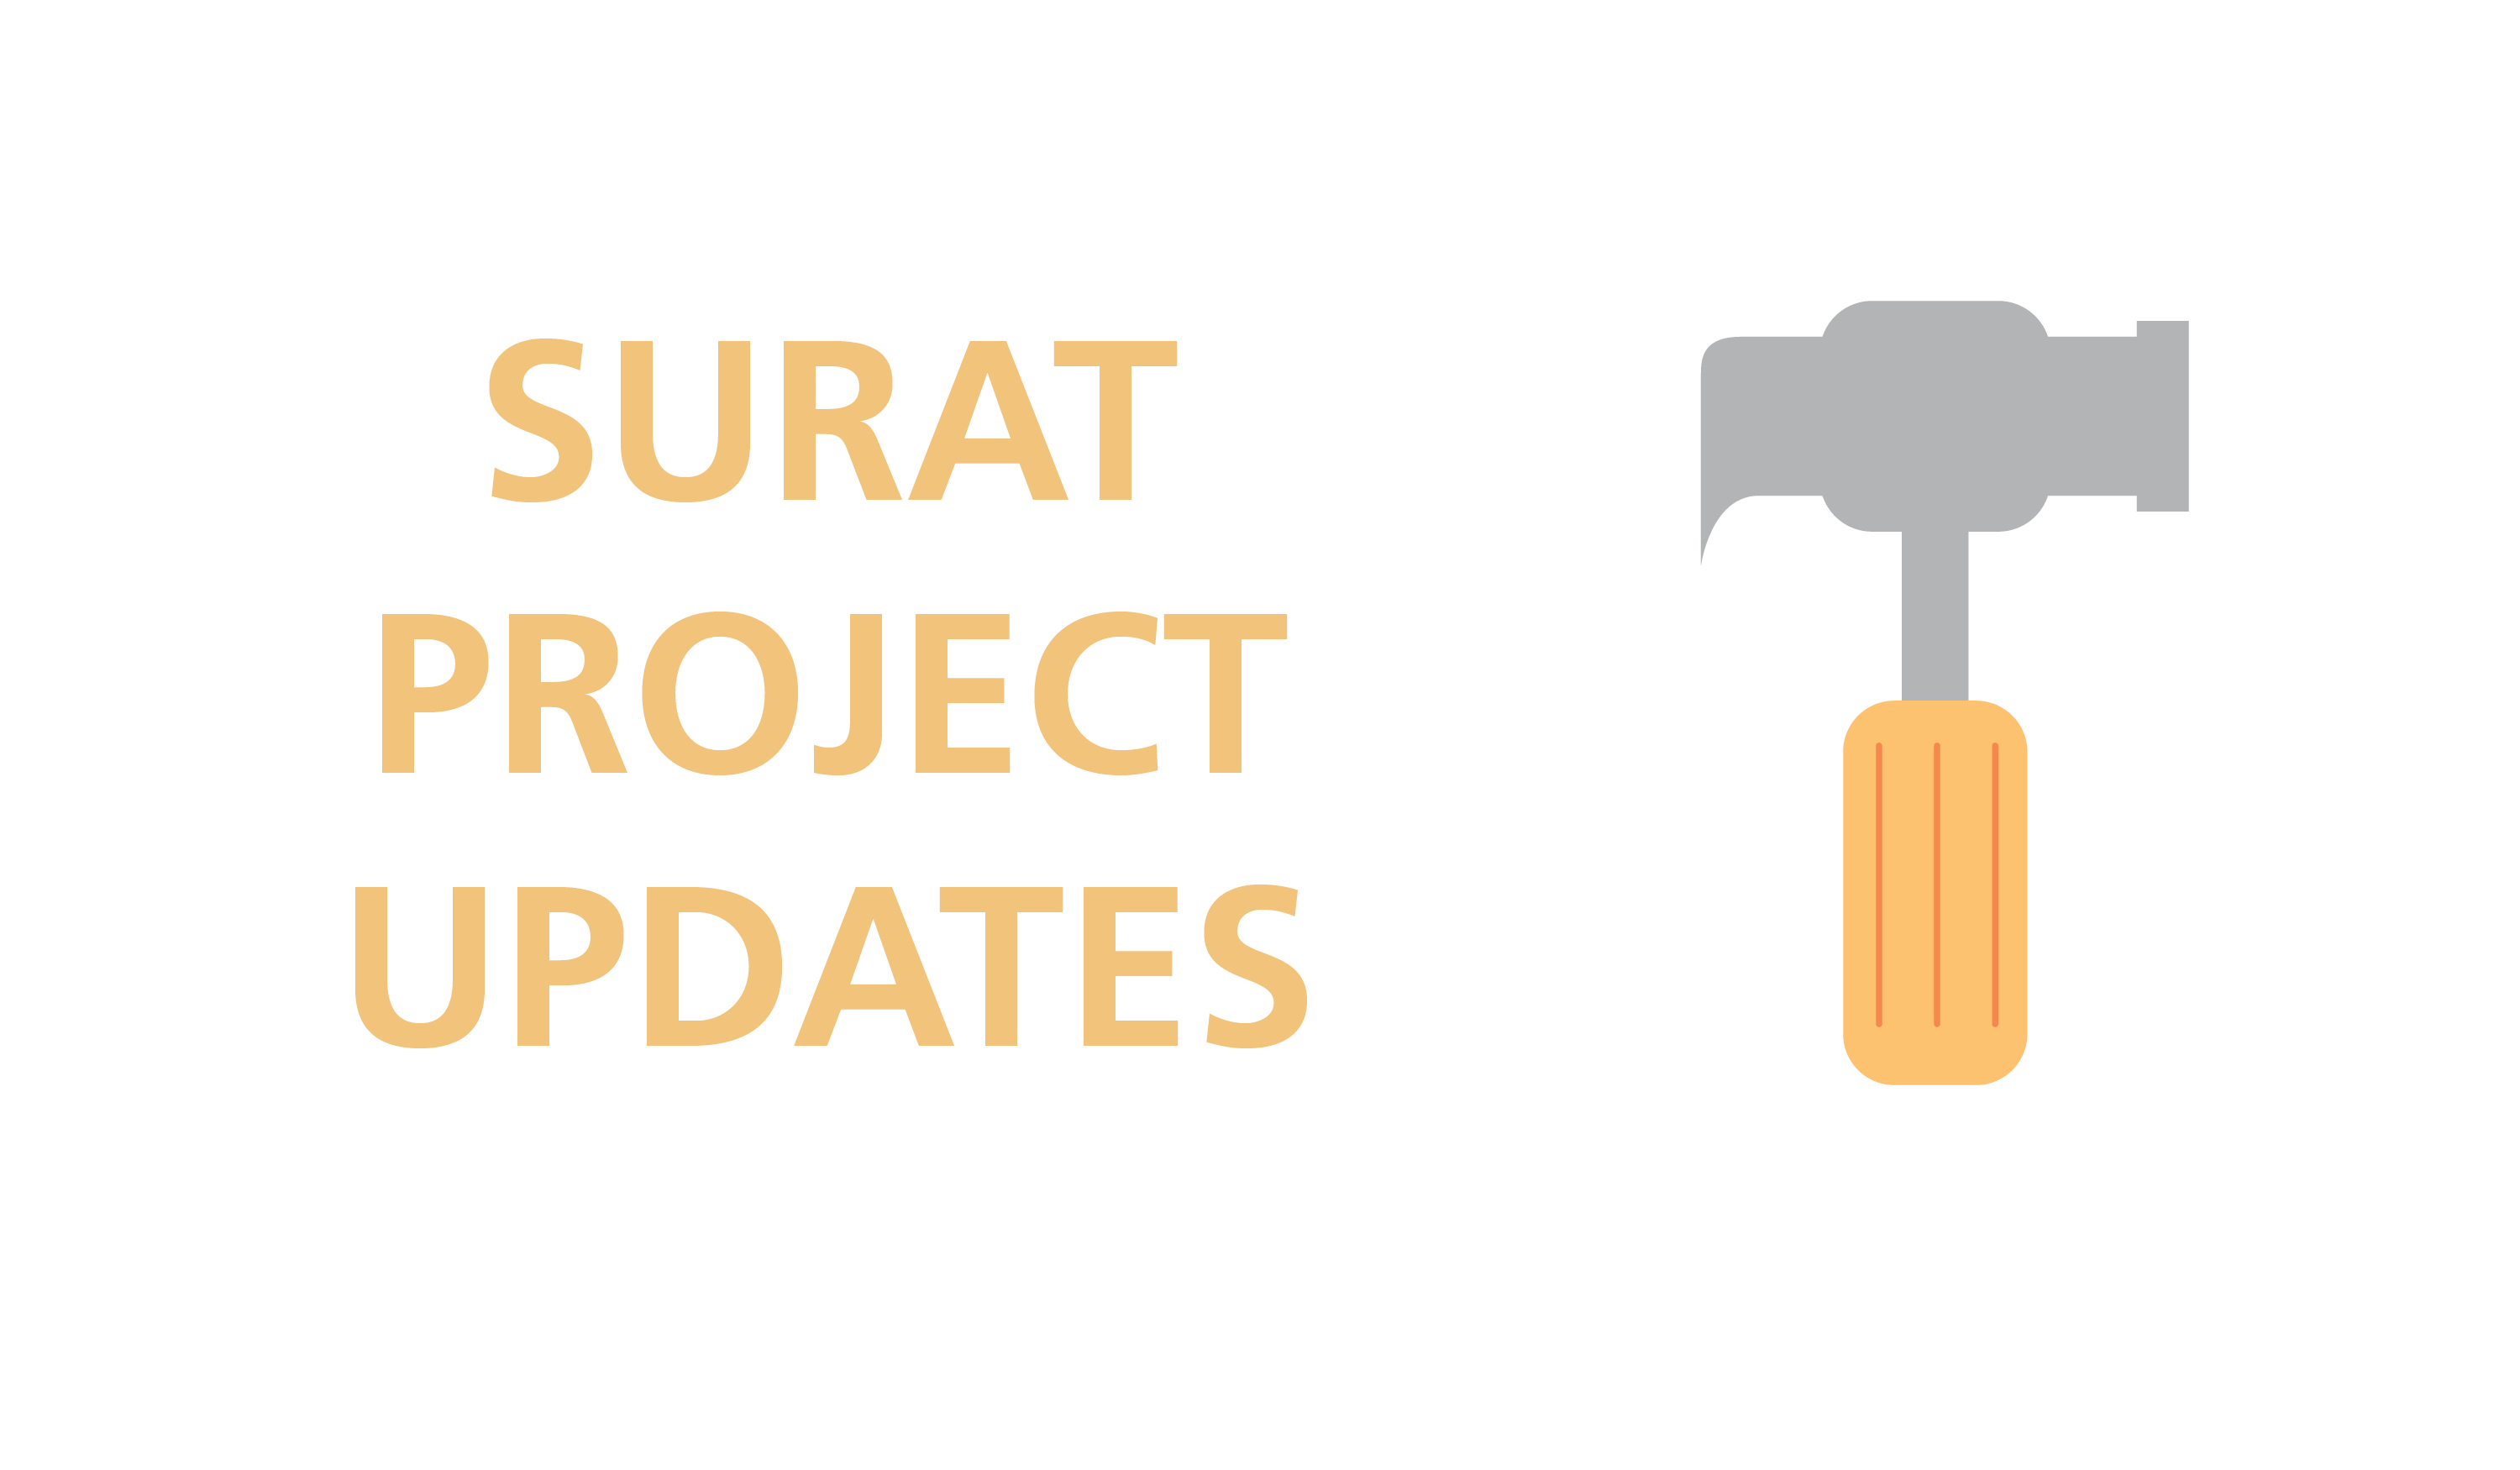 Surat project updates